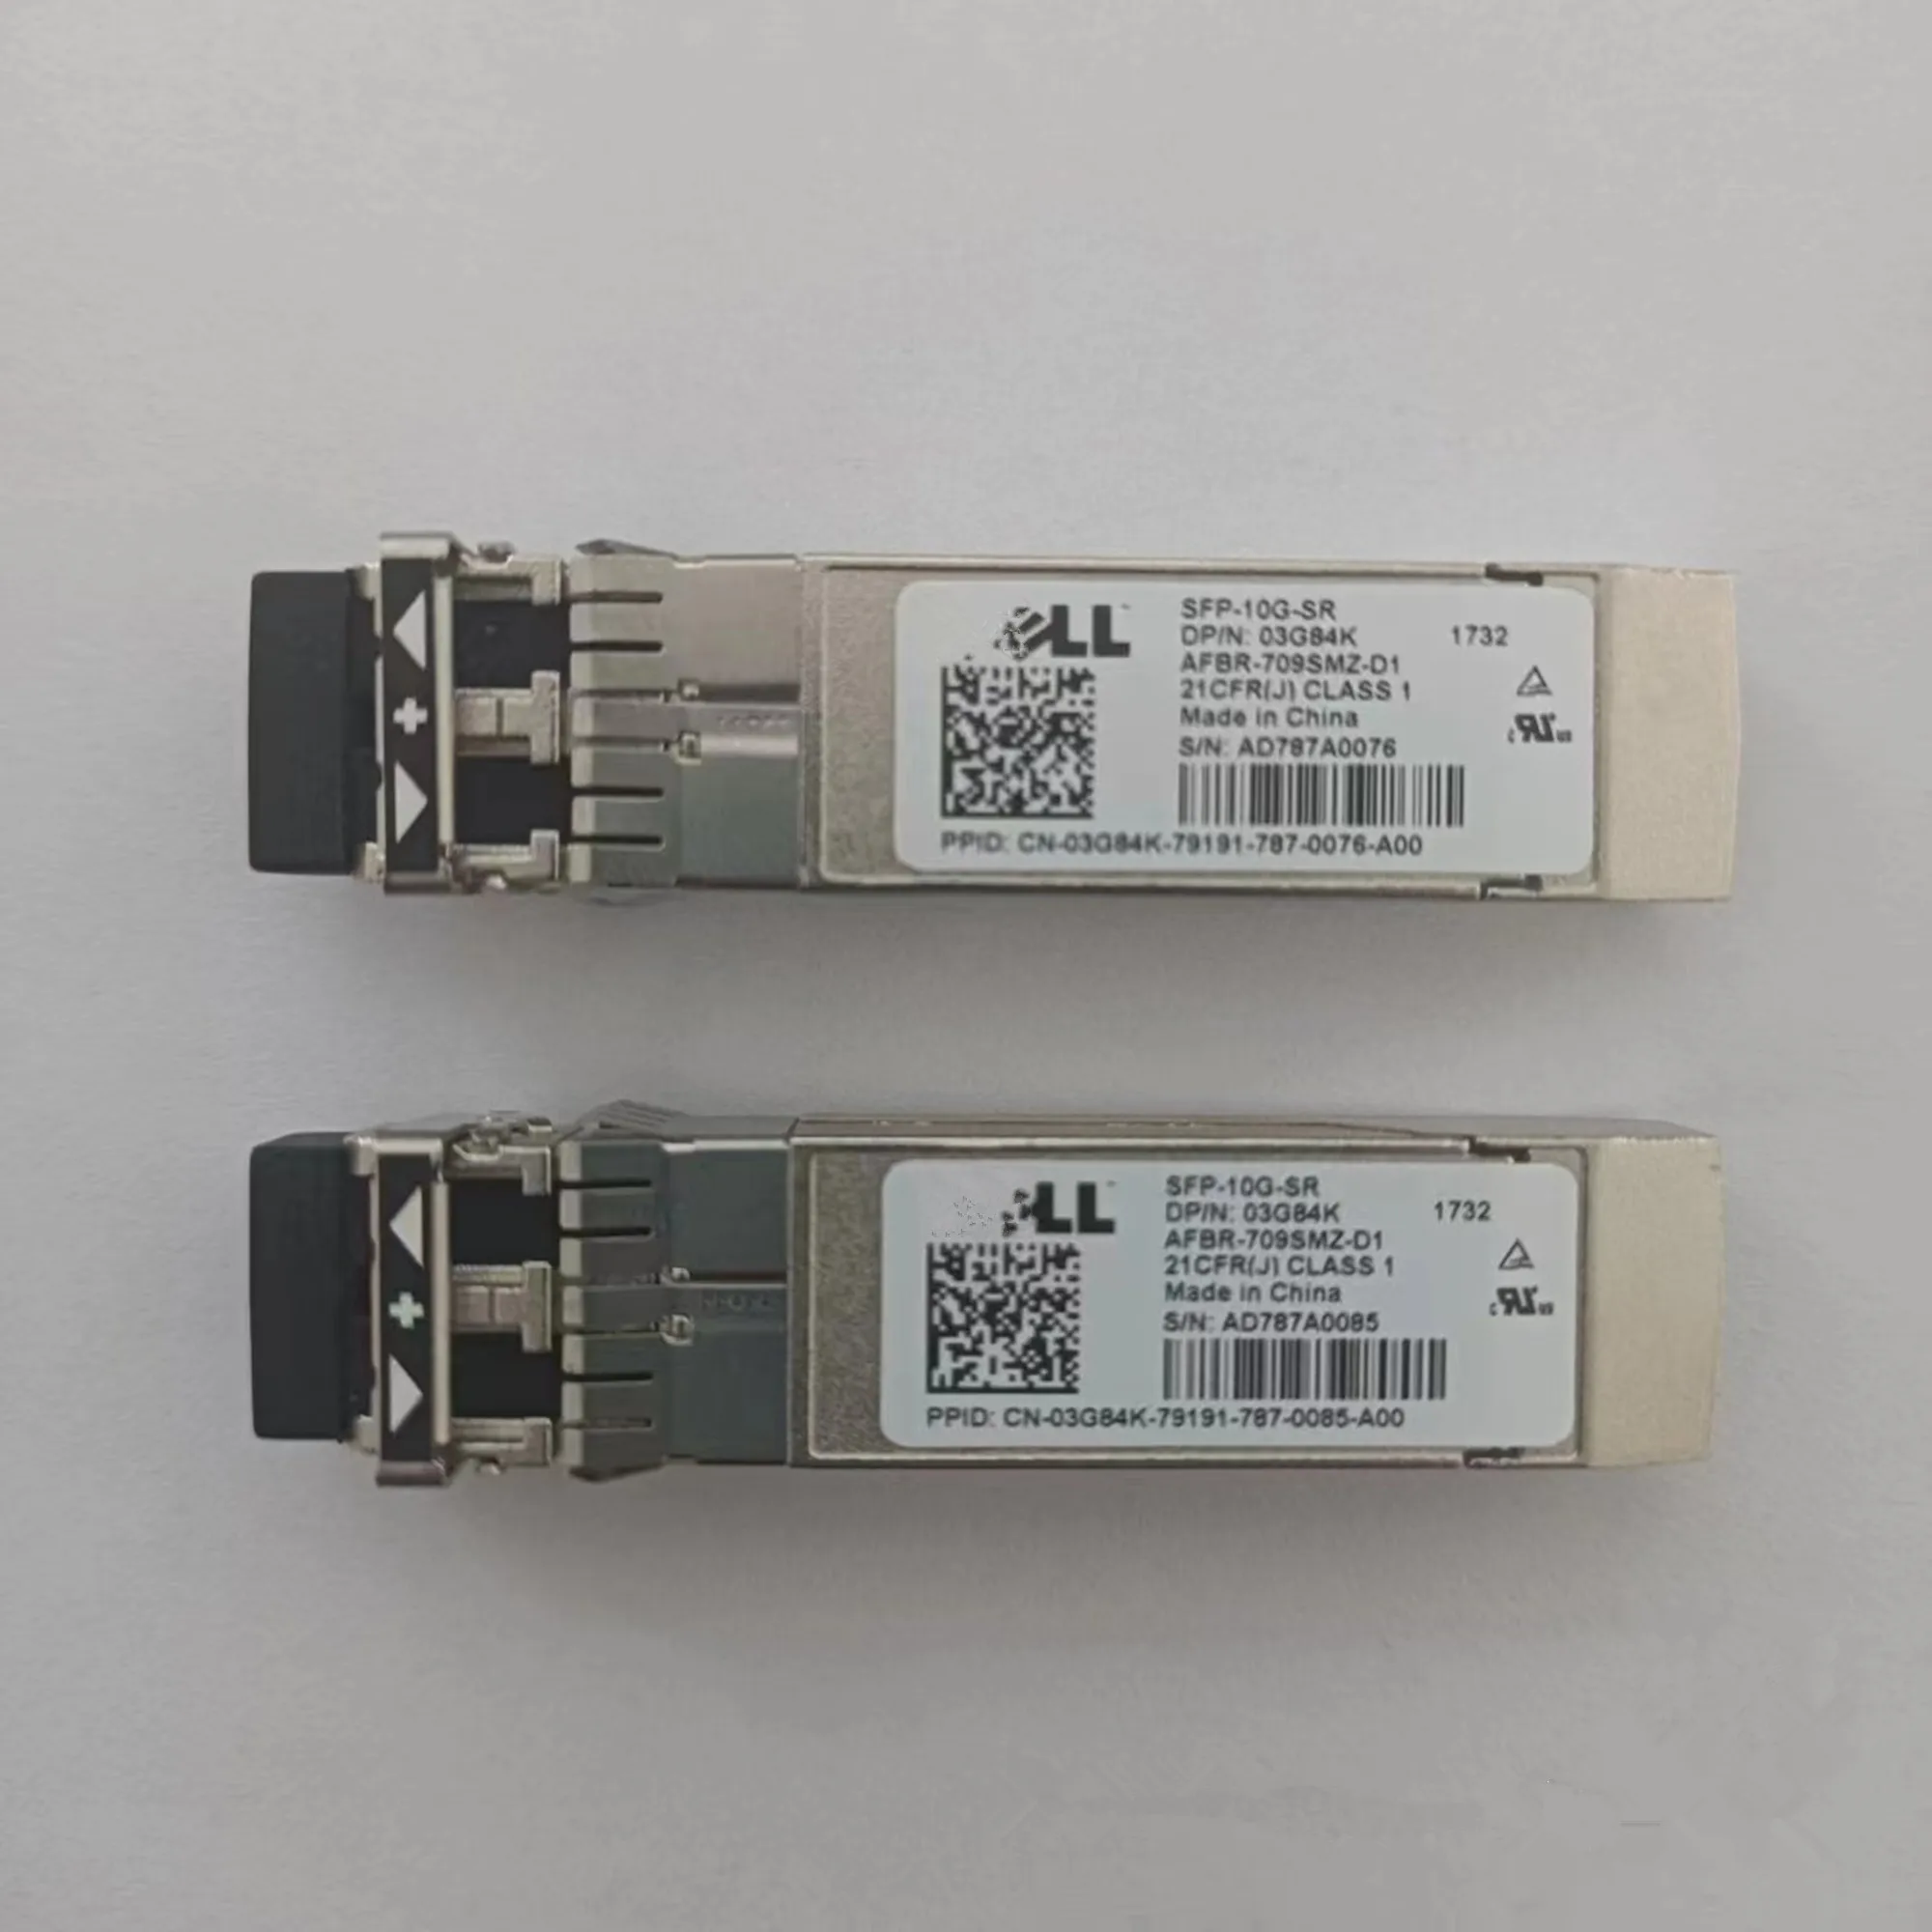 Del-I/AFBR-709SMZ-D1/03G84K/SFP-10G-SR/10Gbase-SR/850nm 300m 10g Transceiver/10g network adapter general switch трансивер lrgp8512 x5atl acd 850nm 1g sfp 1g sfp mm transceiver acd 850nm 1g sfp